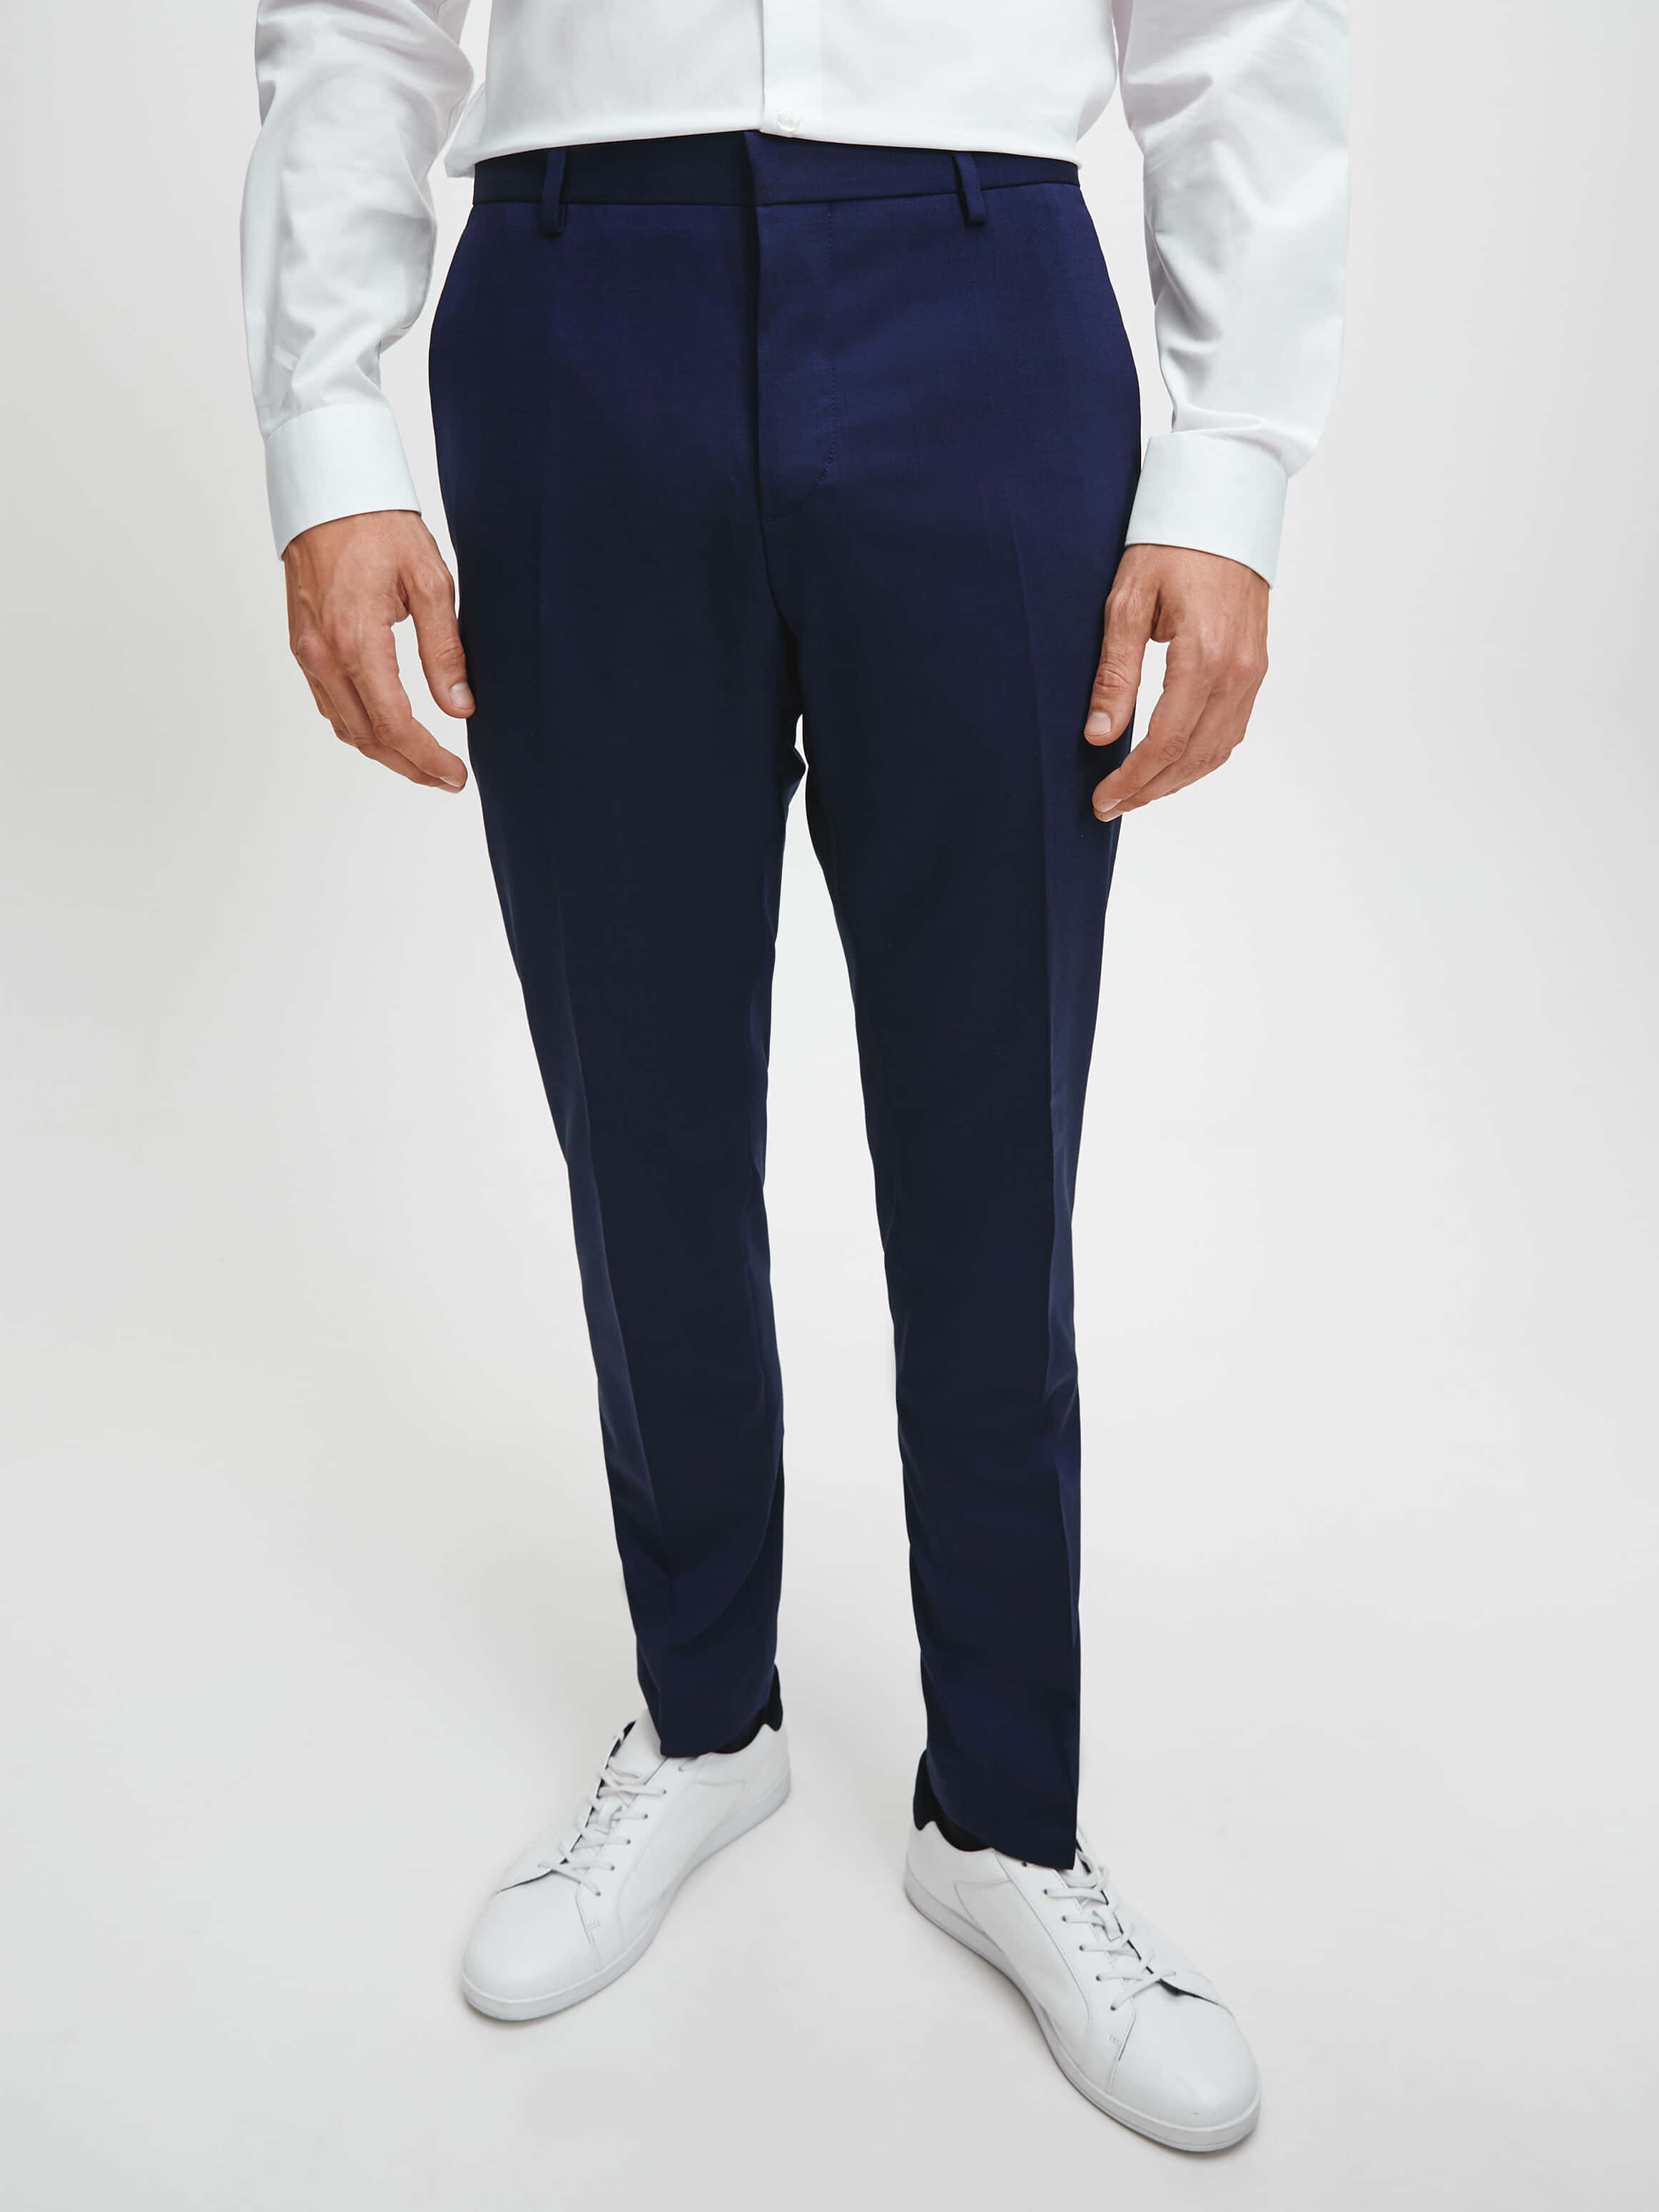 Cómo combinar pantalón azul marino? el pantalón chino